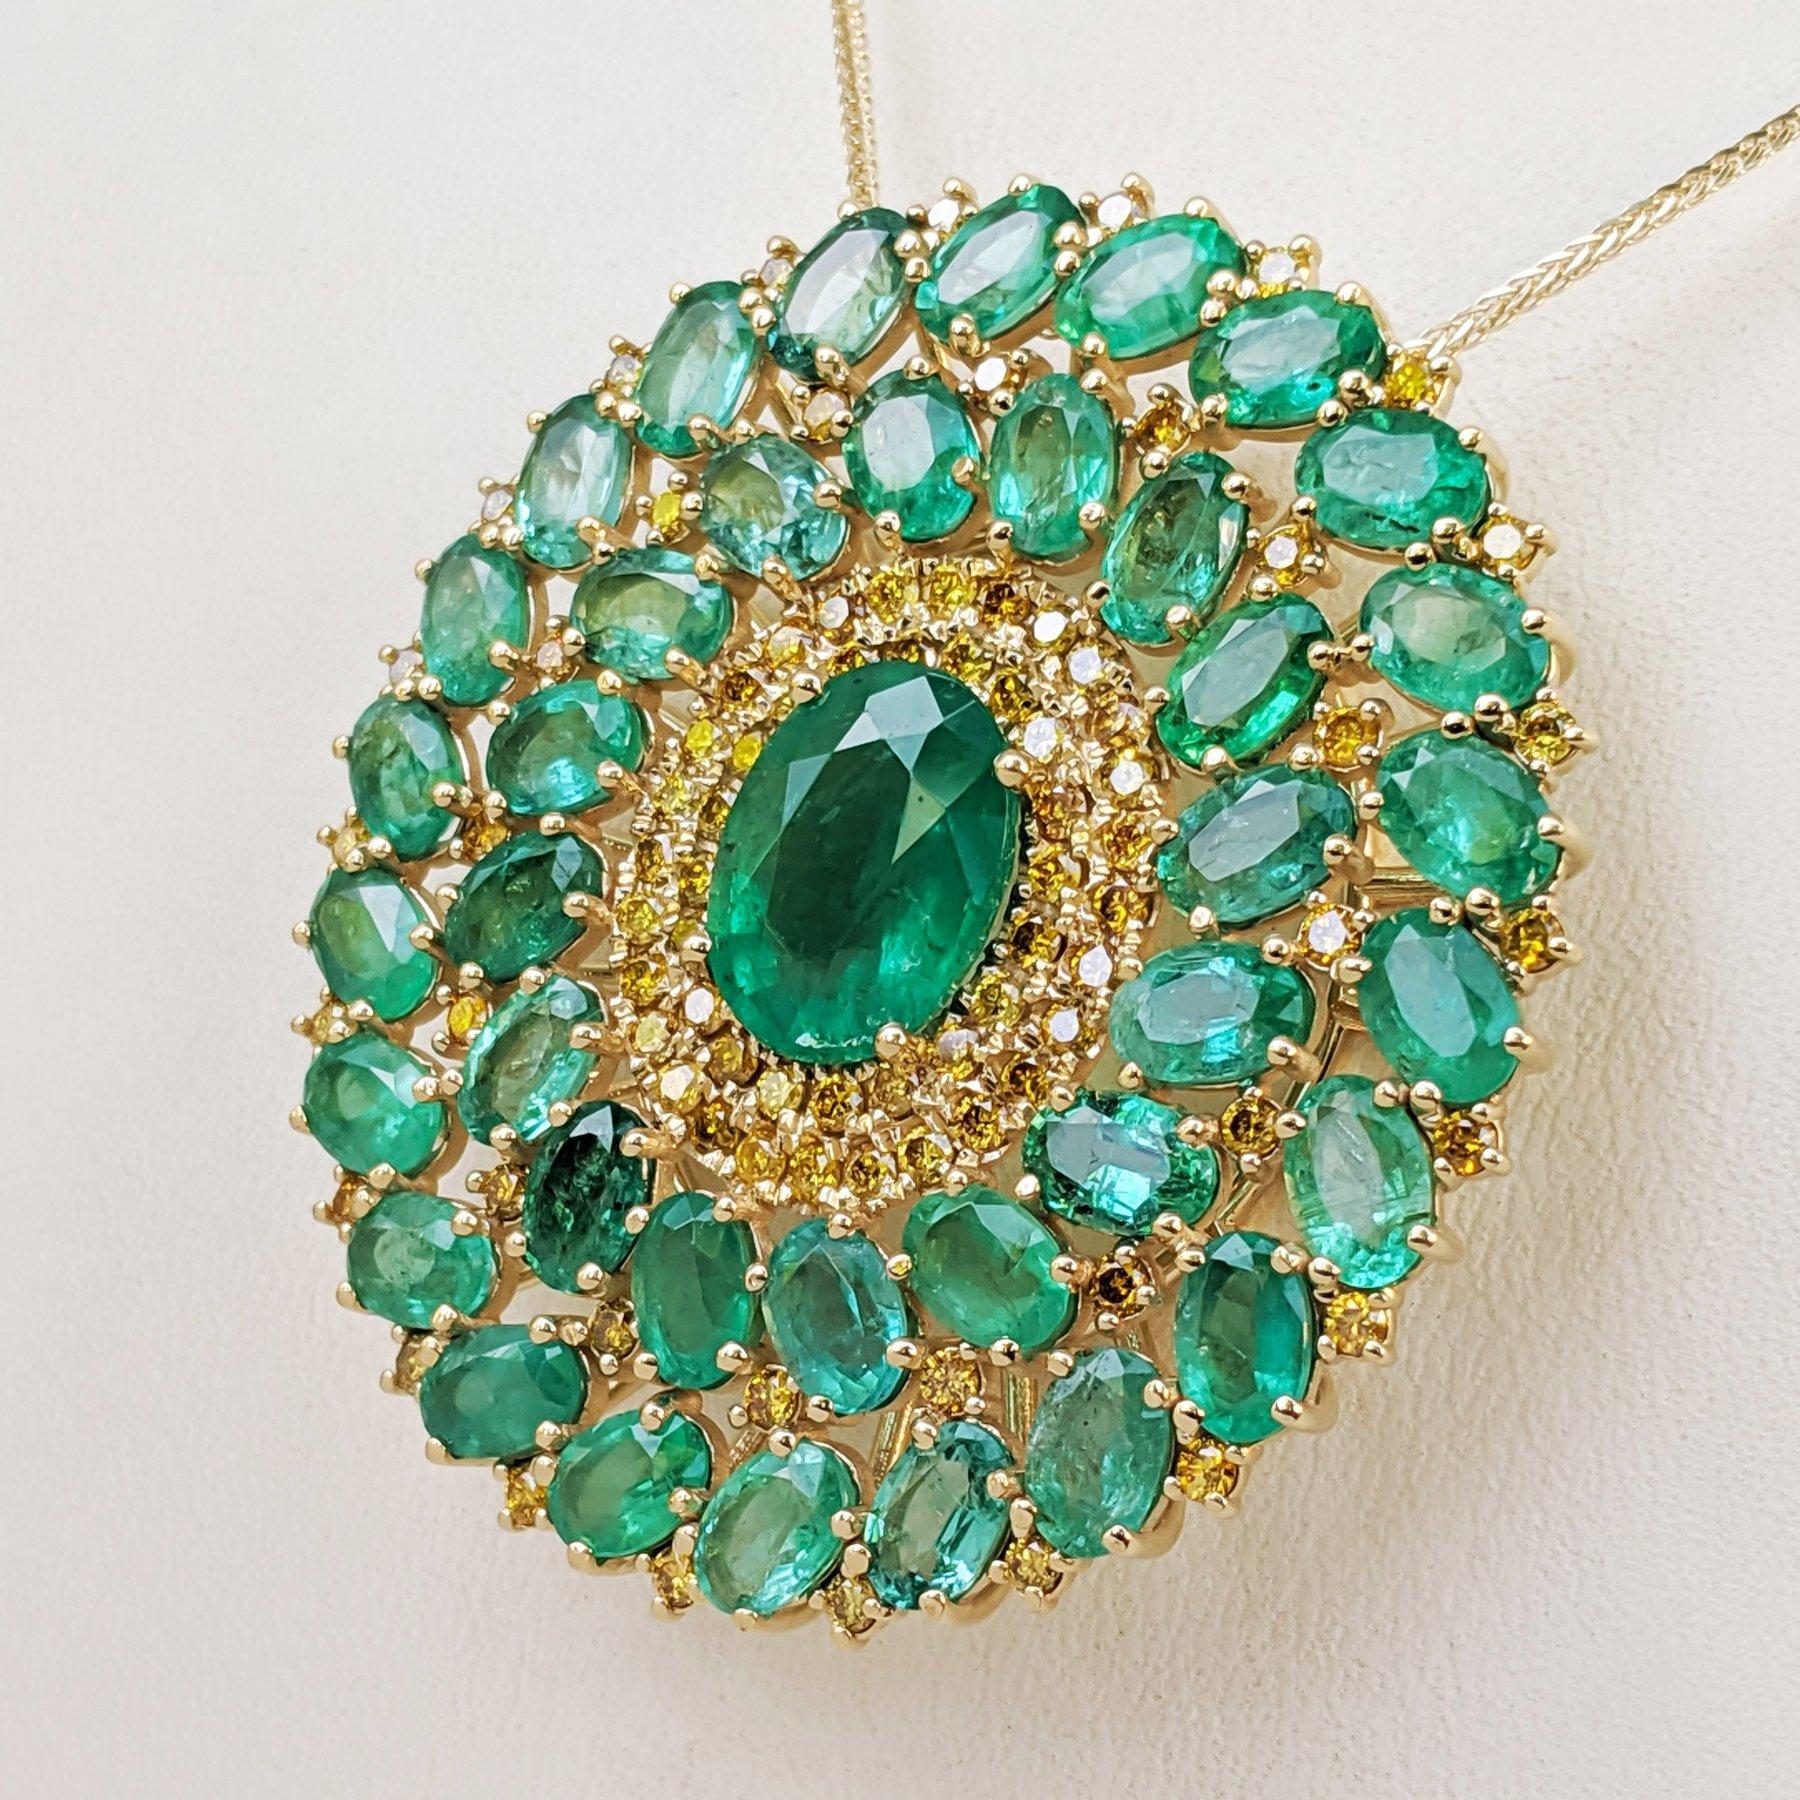 Oval Cut NO RESERVE 20.12Ct Emeralds & 2.05Ct Diamonds 14 kt. Gold Pendant Necklace